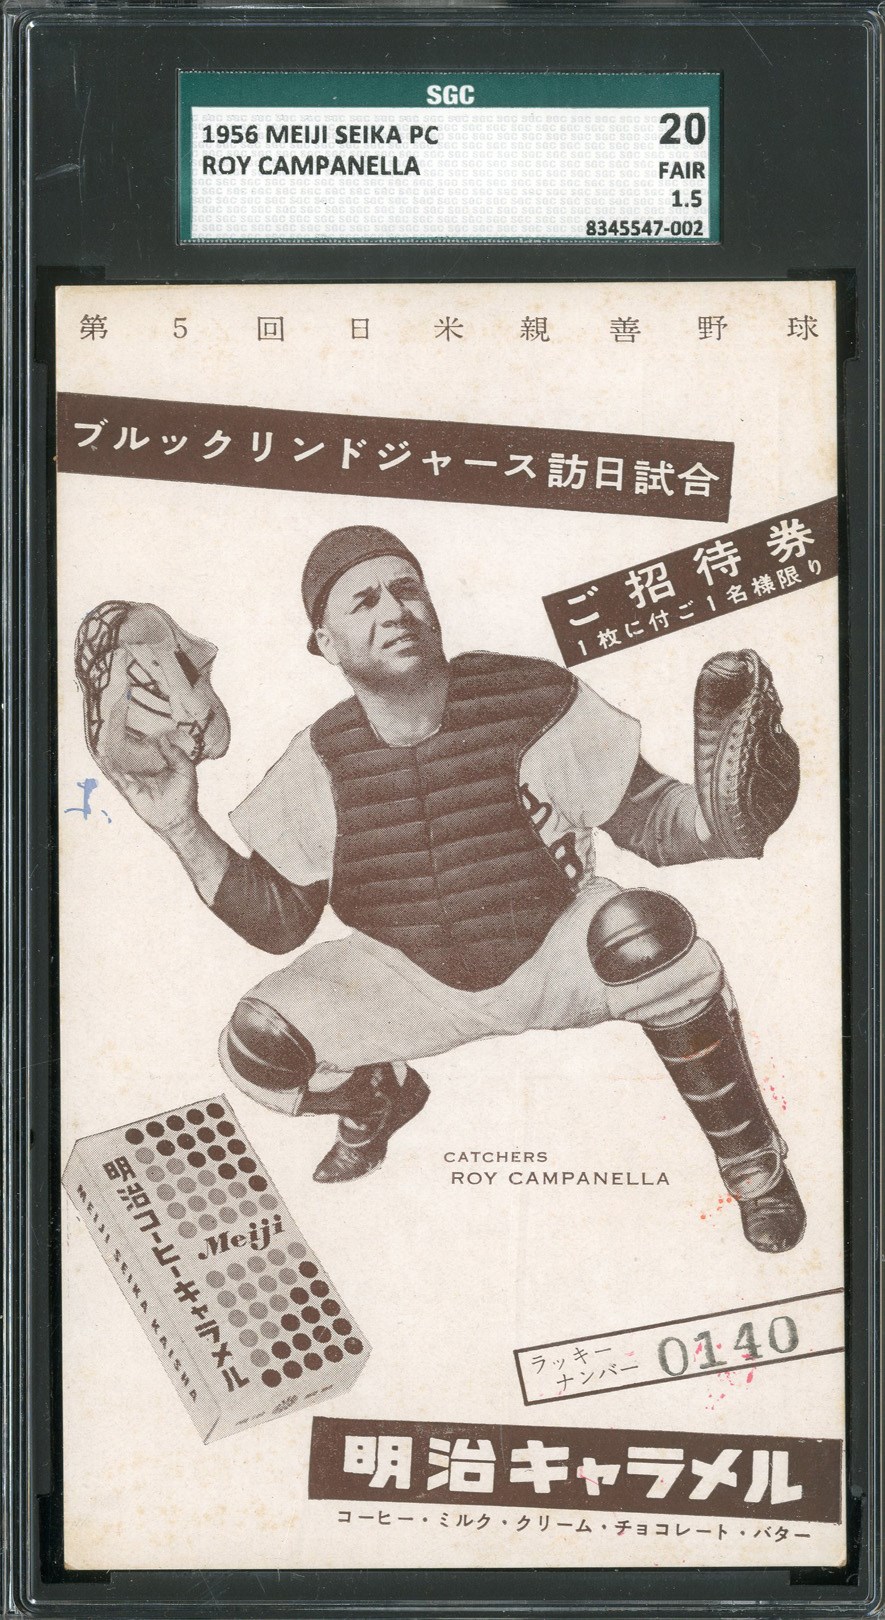 - 1956 Brooklyn Dodgers Meiji Seika Co., Japan Tour Ticket Invitation Card Featuring Roy Campanella